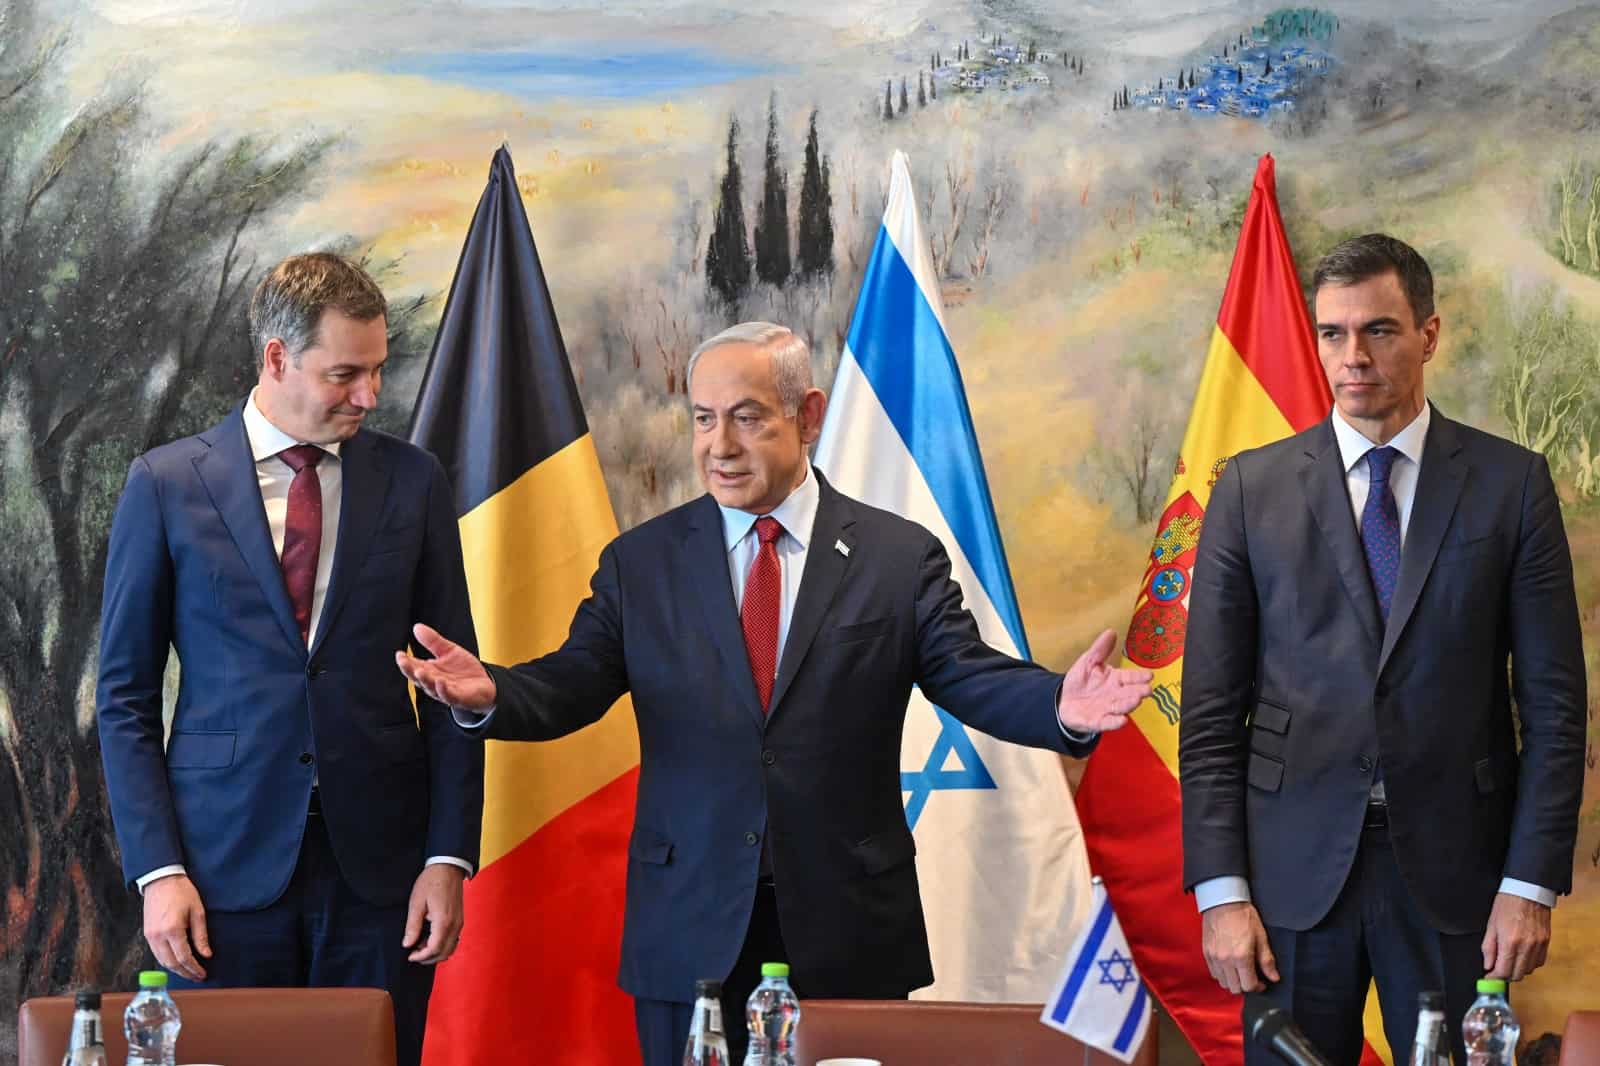 Jerusalem summons Spanish envoy over PM's ‘shameful comments'